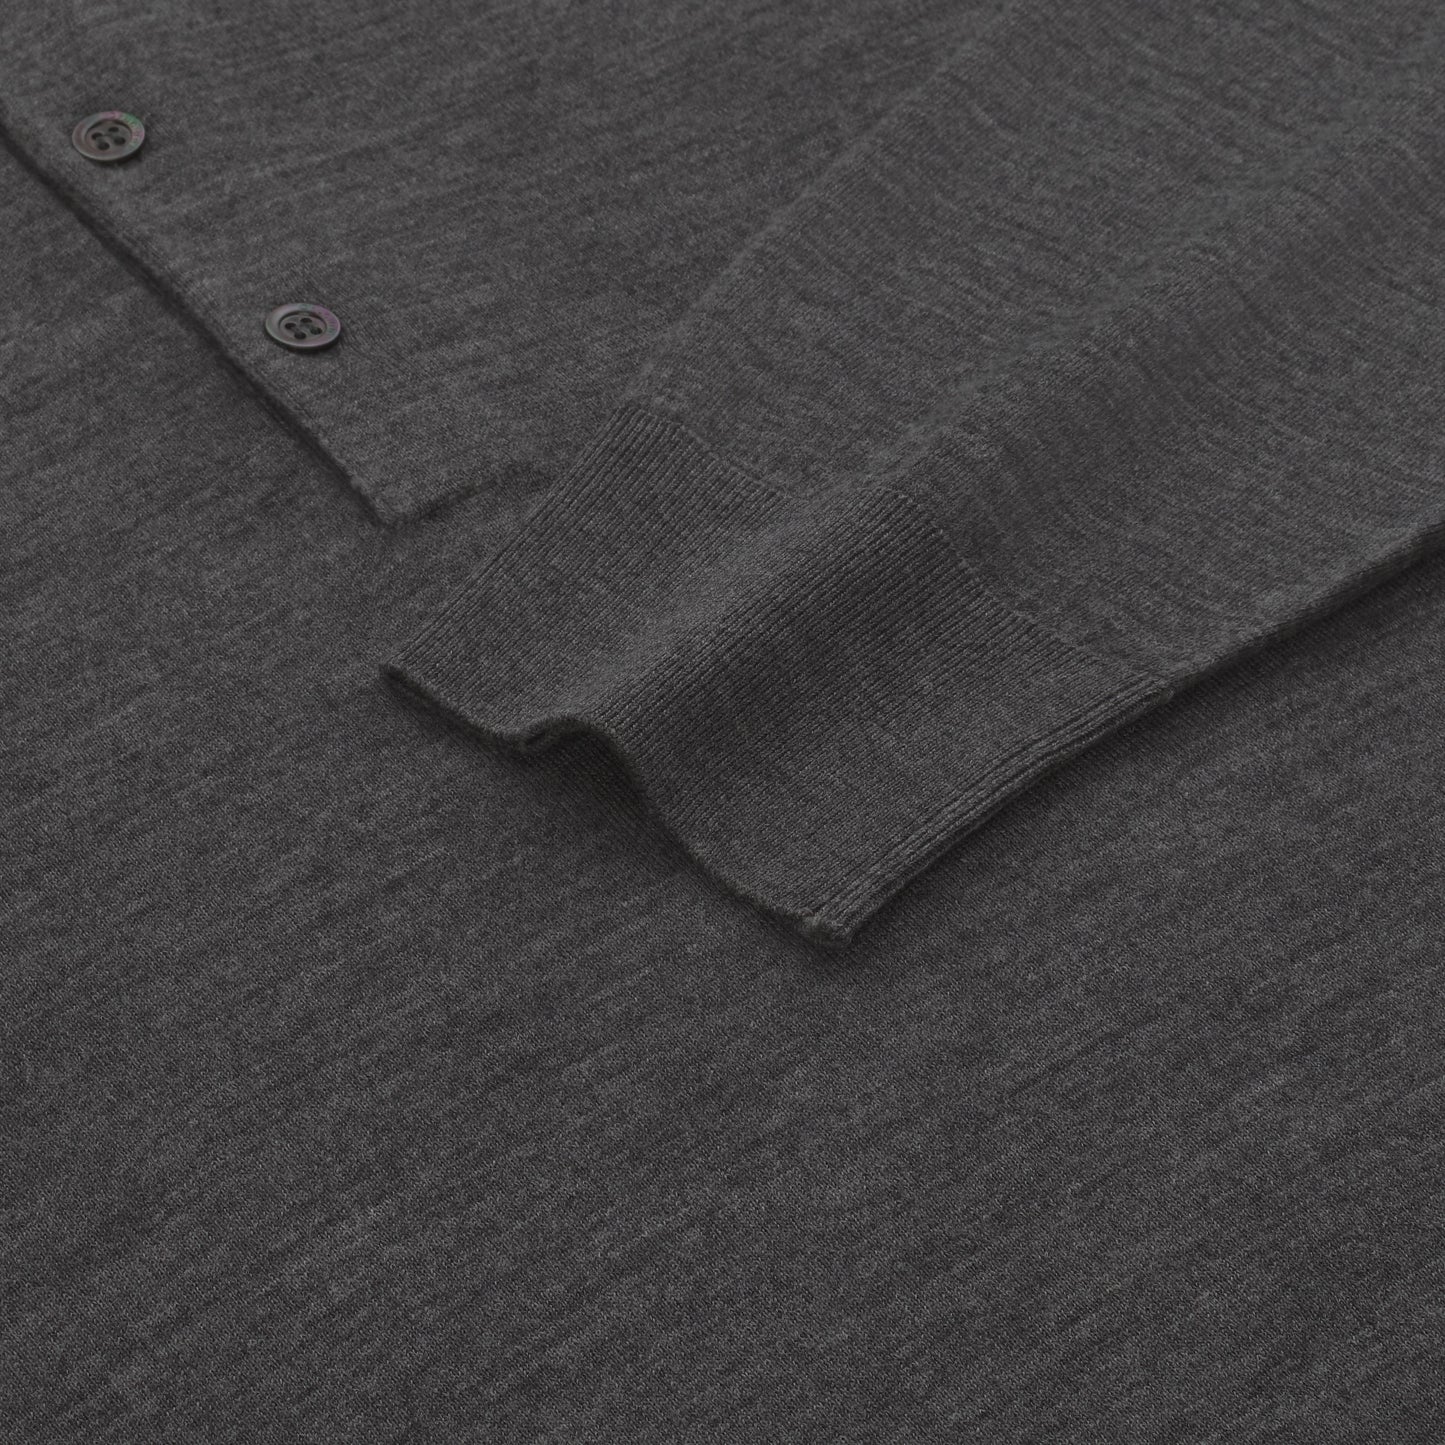 Wool Sweater Polo Shirt in Grey Melange